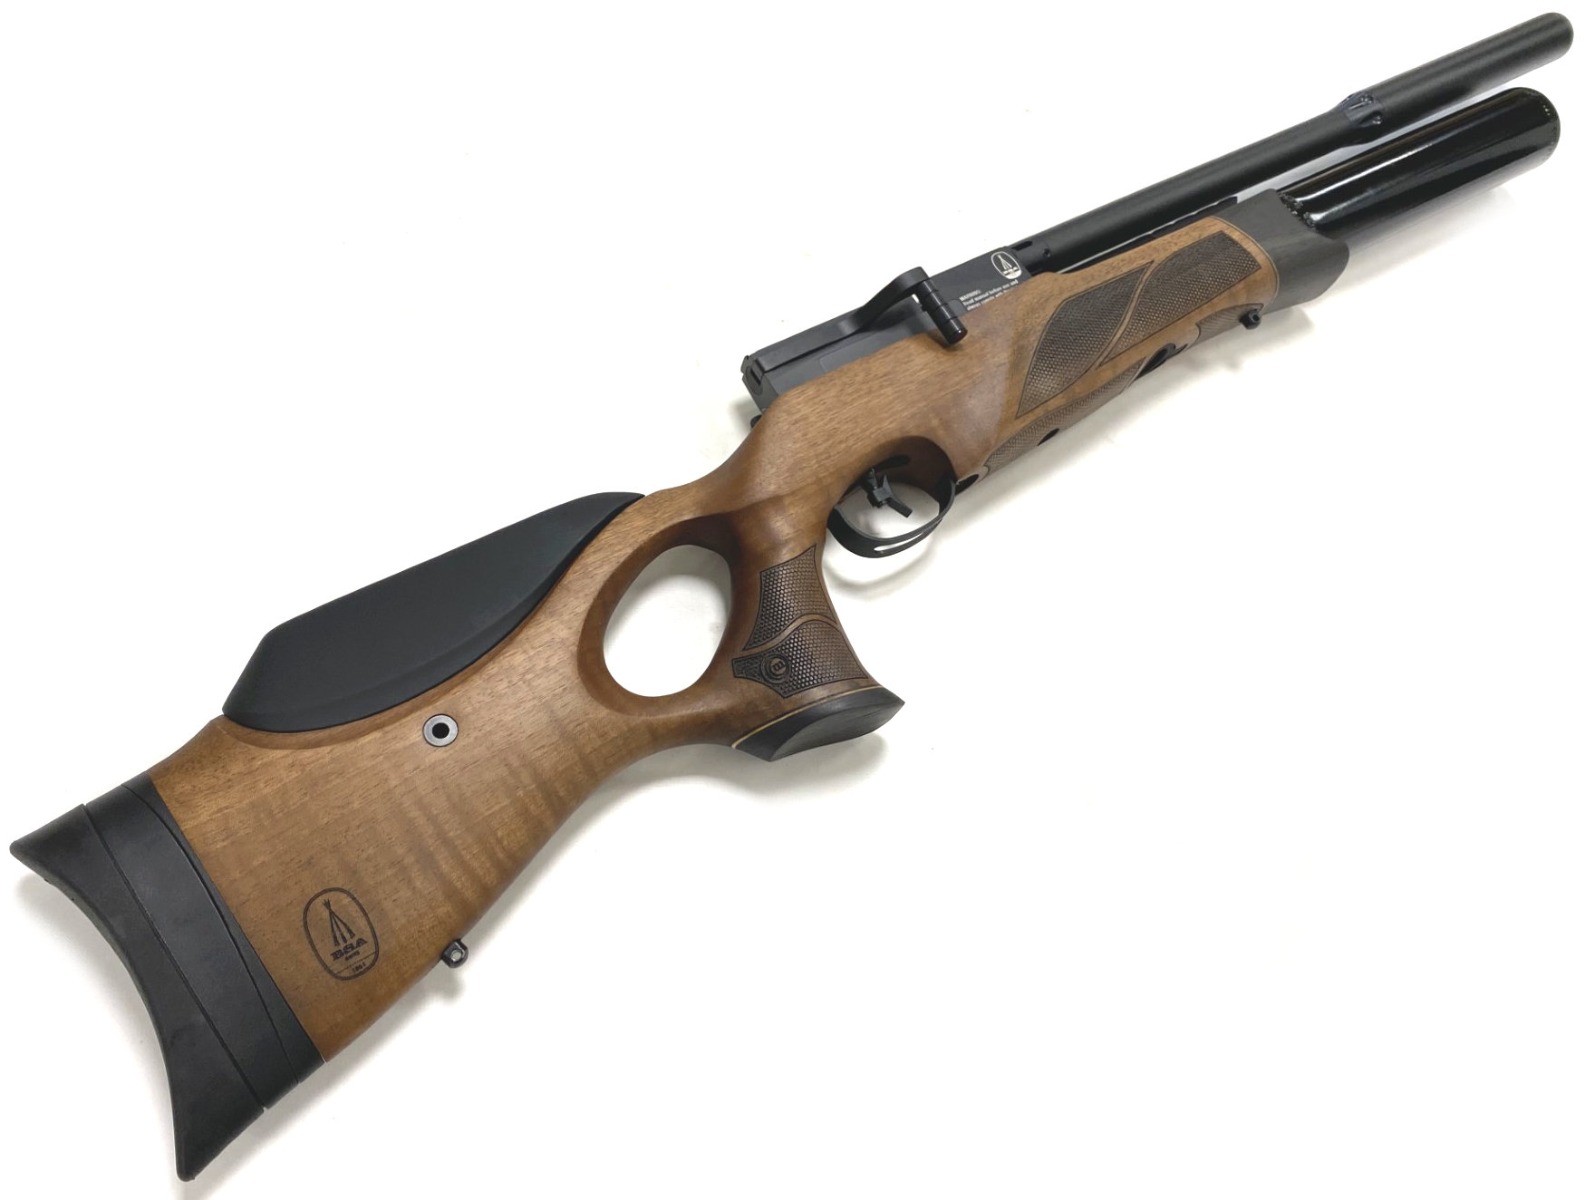 BSA R12 CLX Pro Walnut Super Carbine .22 Air Rifle - 230808/004 Image 1